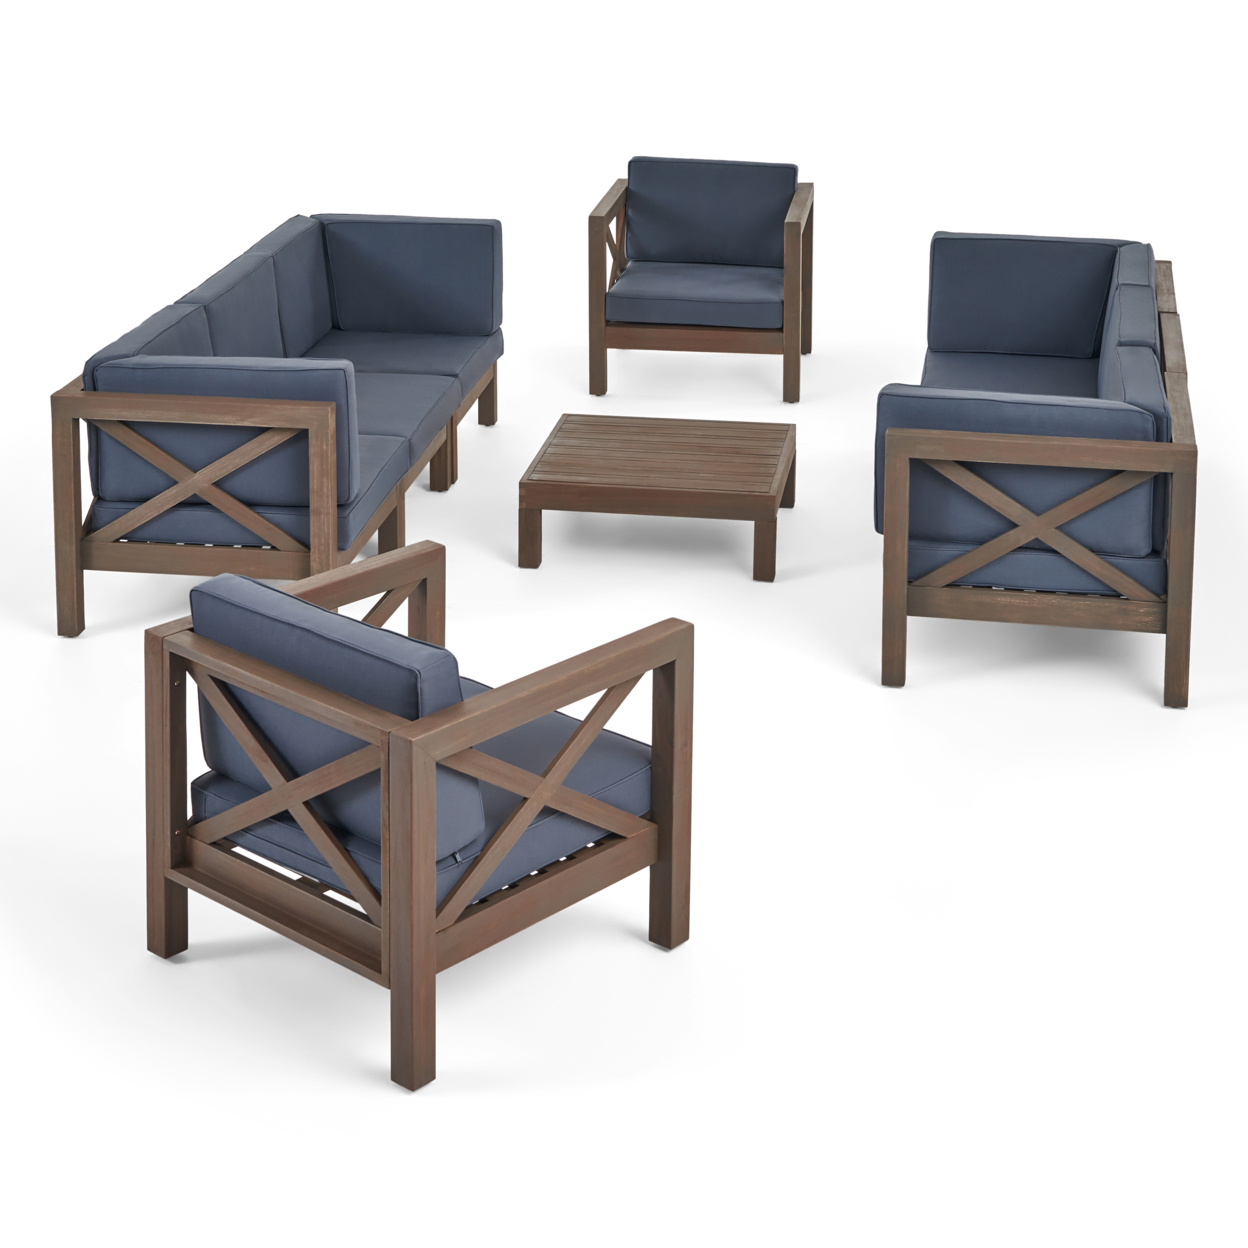 Morgan Outdoor 8 Seater Acacia Wood Sofa And Club Chair Set - Teak Finish + Beige